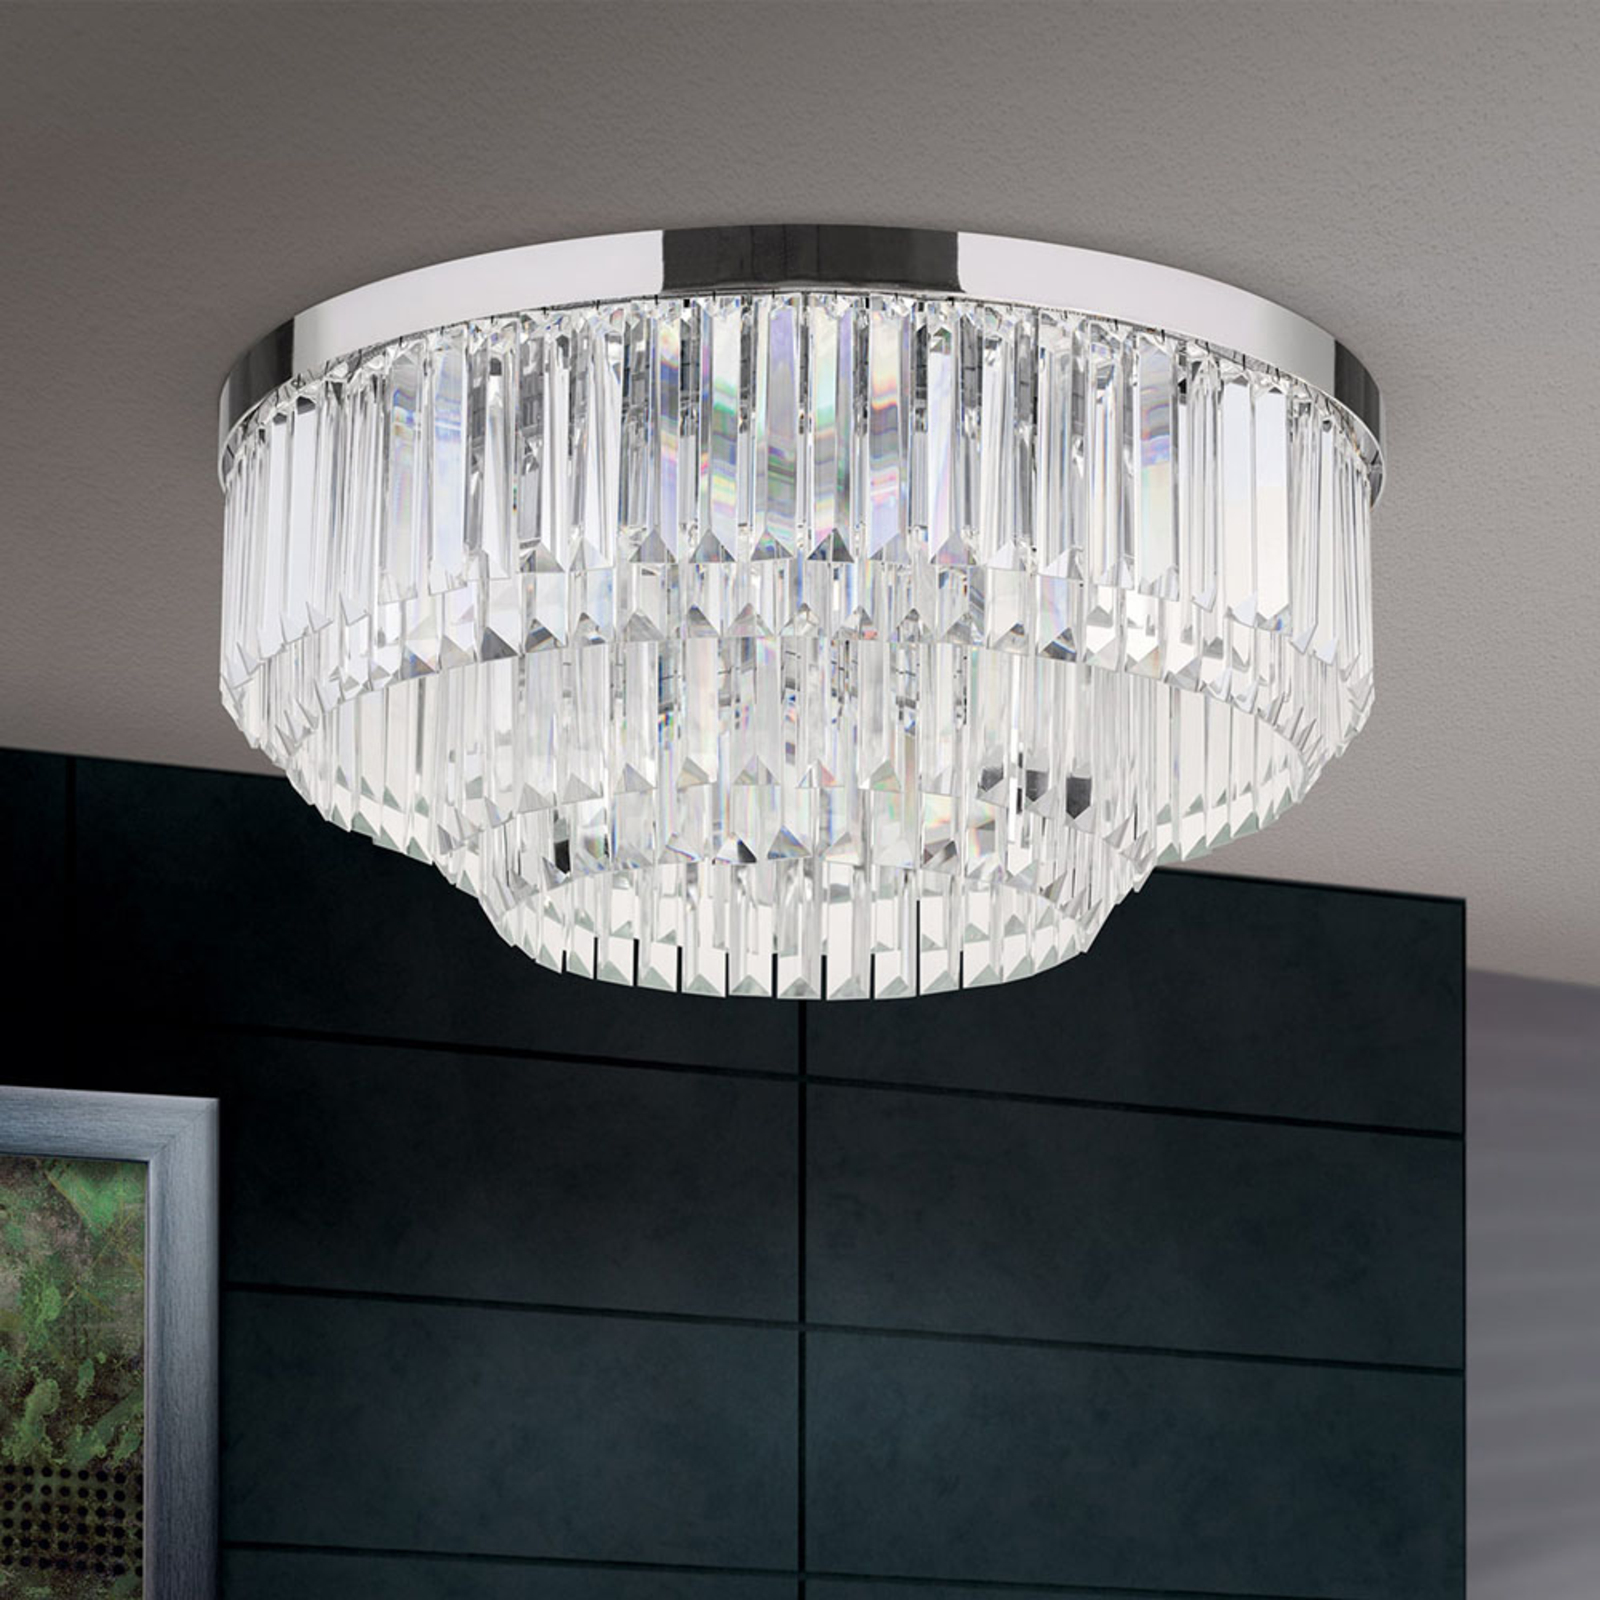 Prism LED ceiling light, chrome, Ø 55 cm